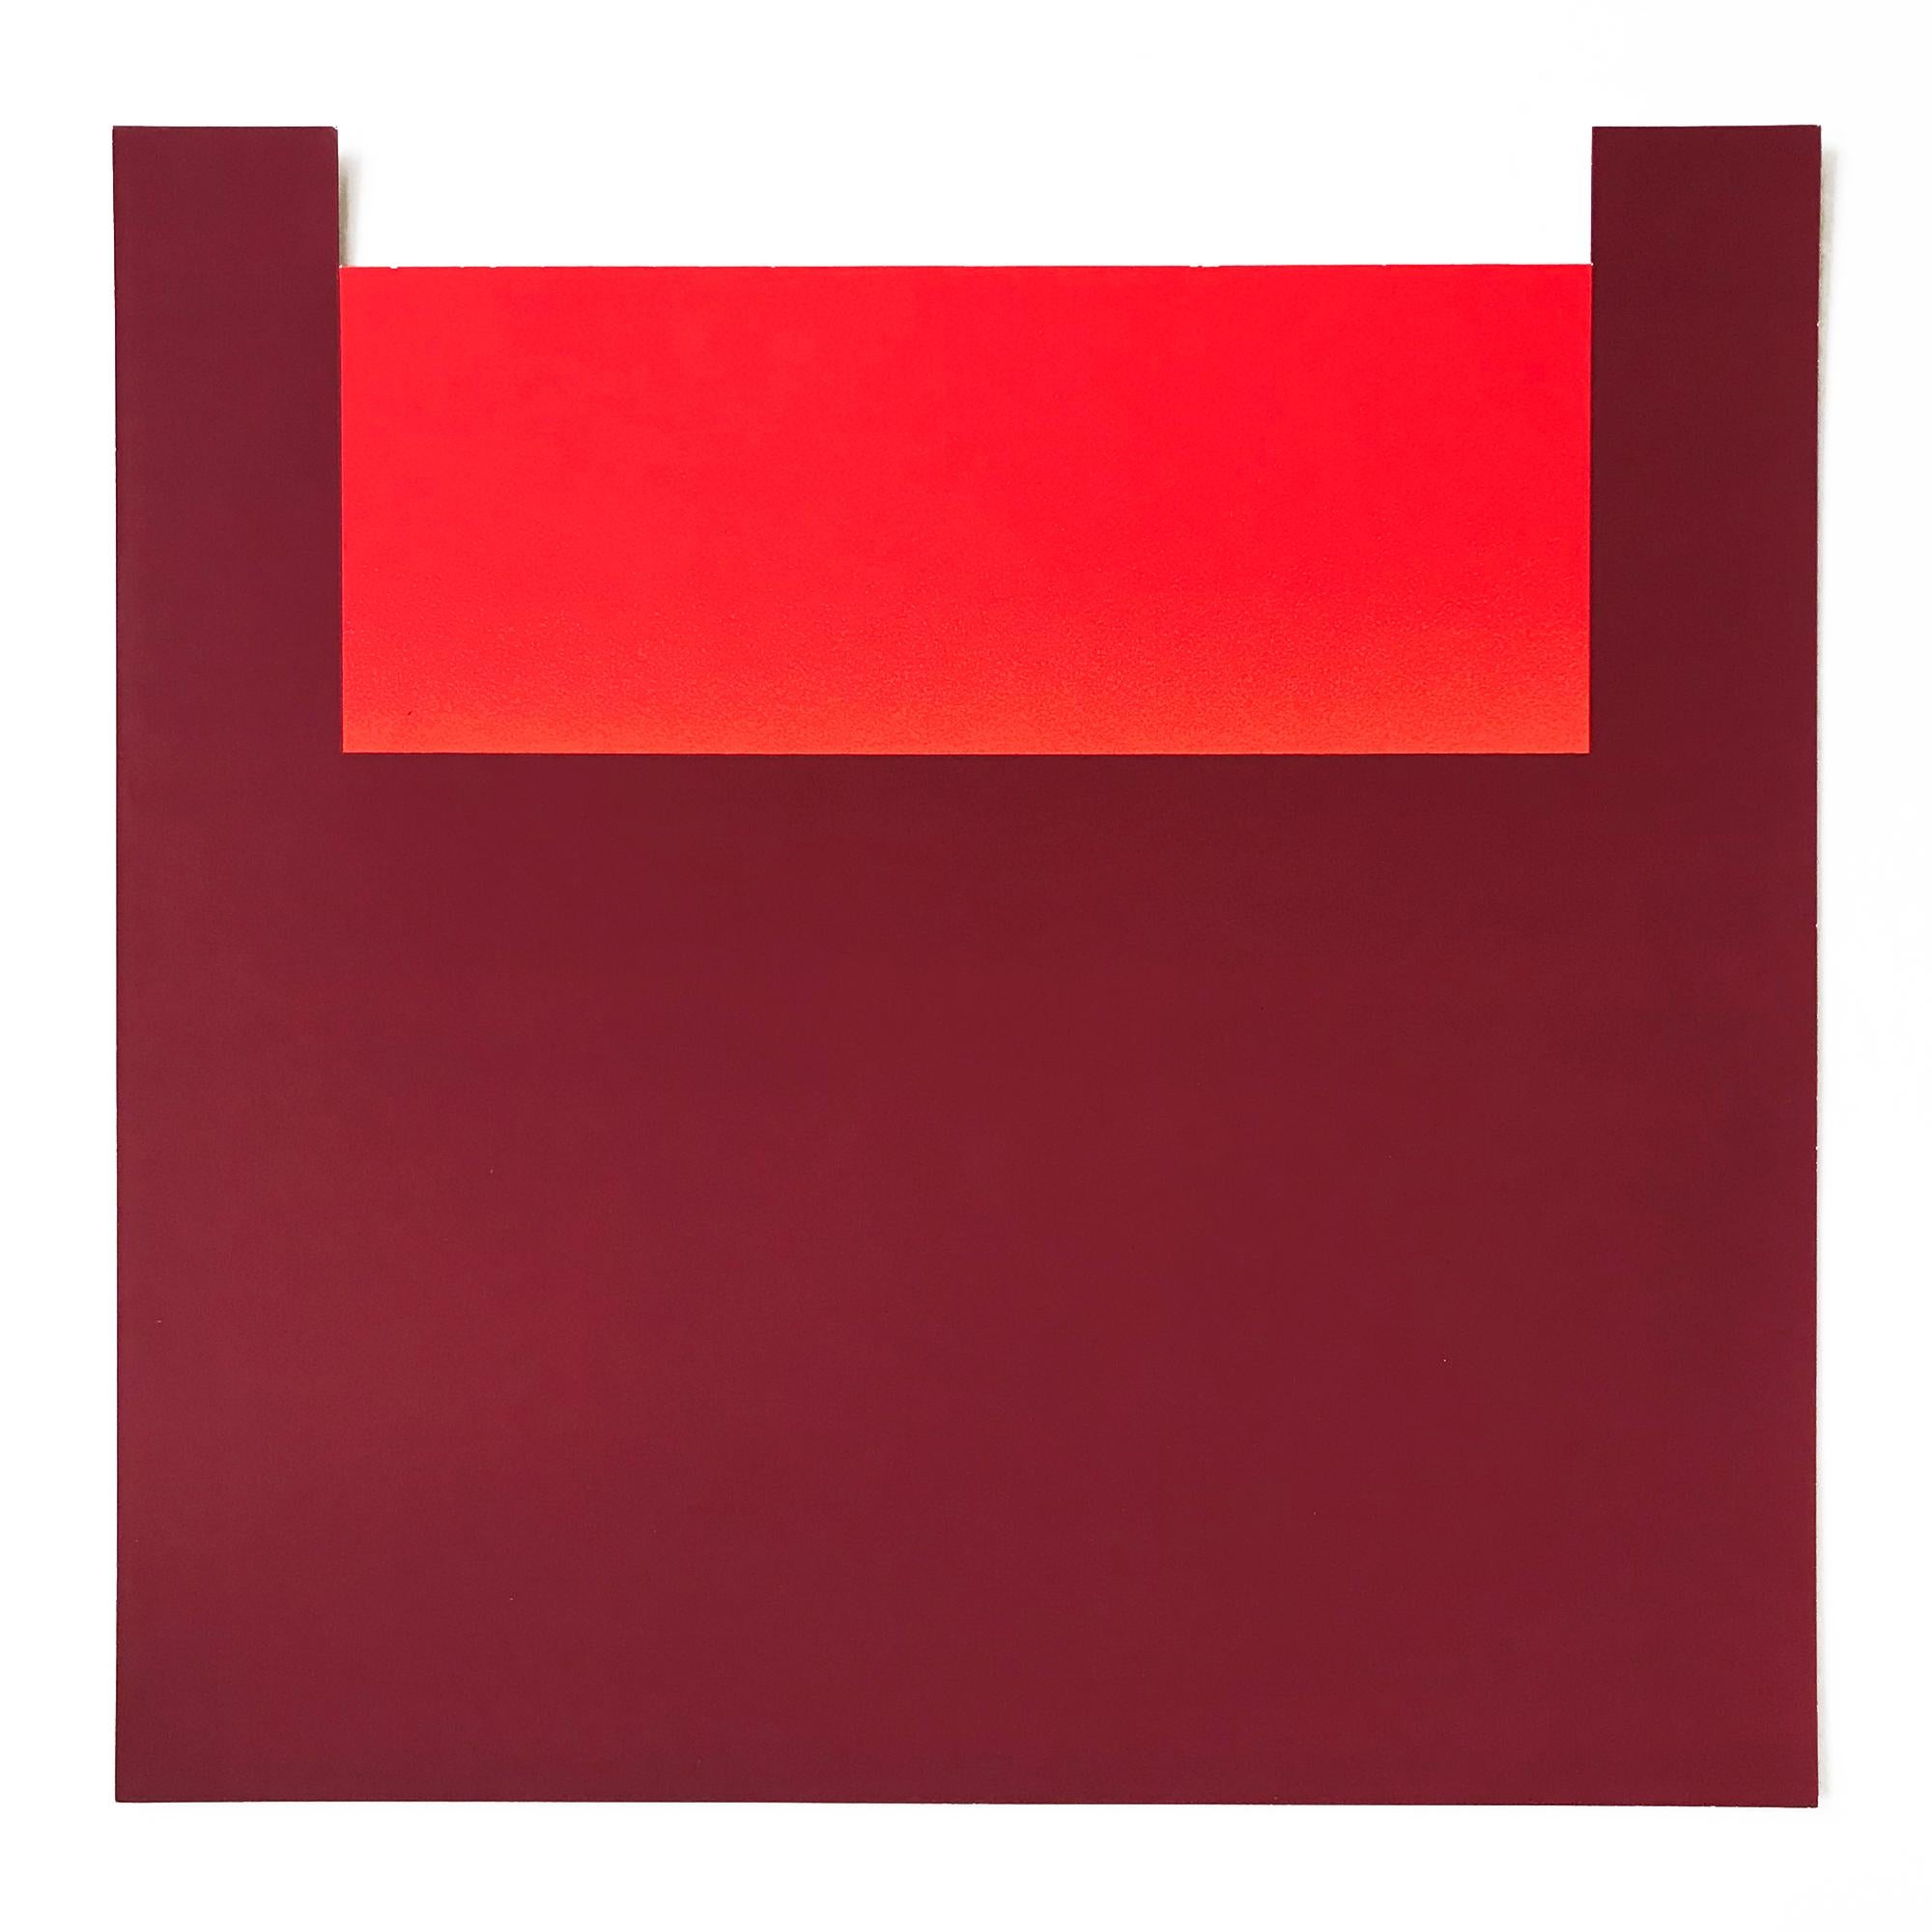 Rupprecht Geiger Abstract Print - No. 11 (from "All die Roten Farben"), Screenprint, Abstract, Minimalism